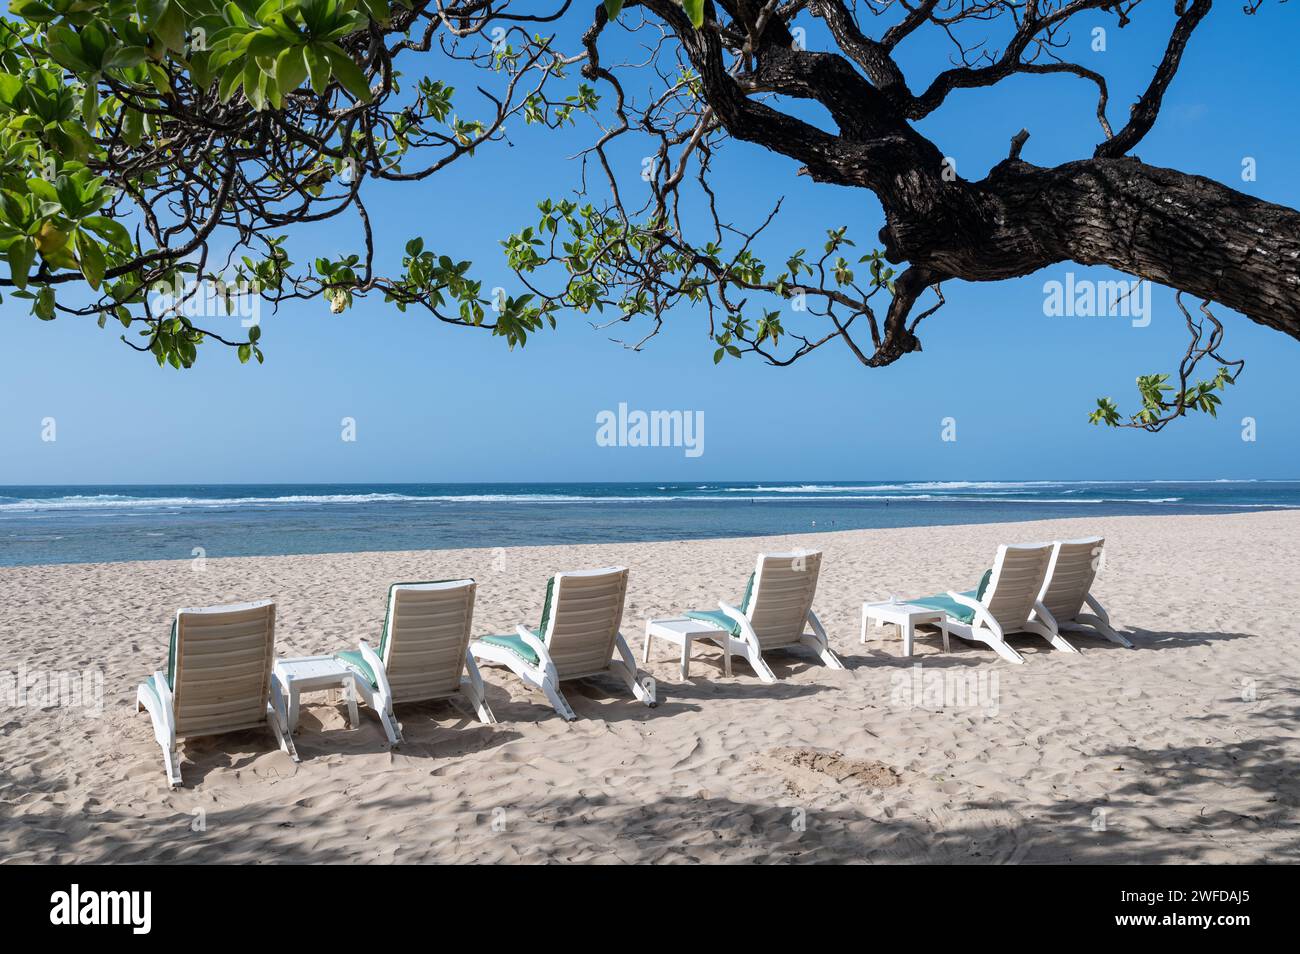 25.07.2023, Nusa Dua, Benoa, Bali, Indonesia, Asia - Empty tropical sandy beach with beach chairs on the beach at Nusa Dua with a view of the sea. Stock Photo